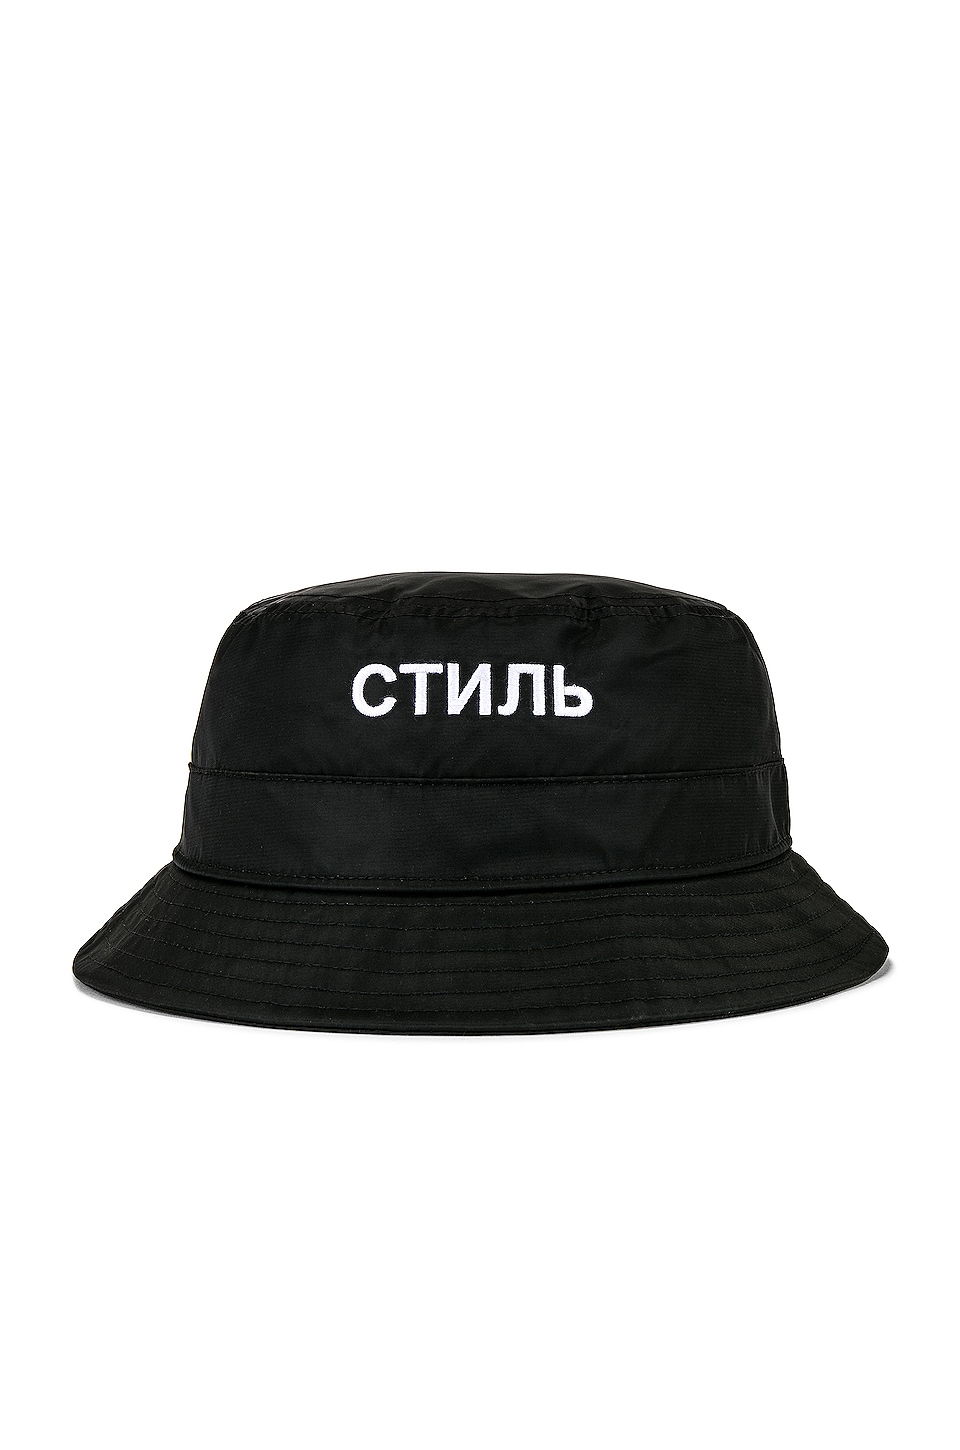 Heron Preston CTNMB Bucket Hat in Black | REVOLVE